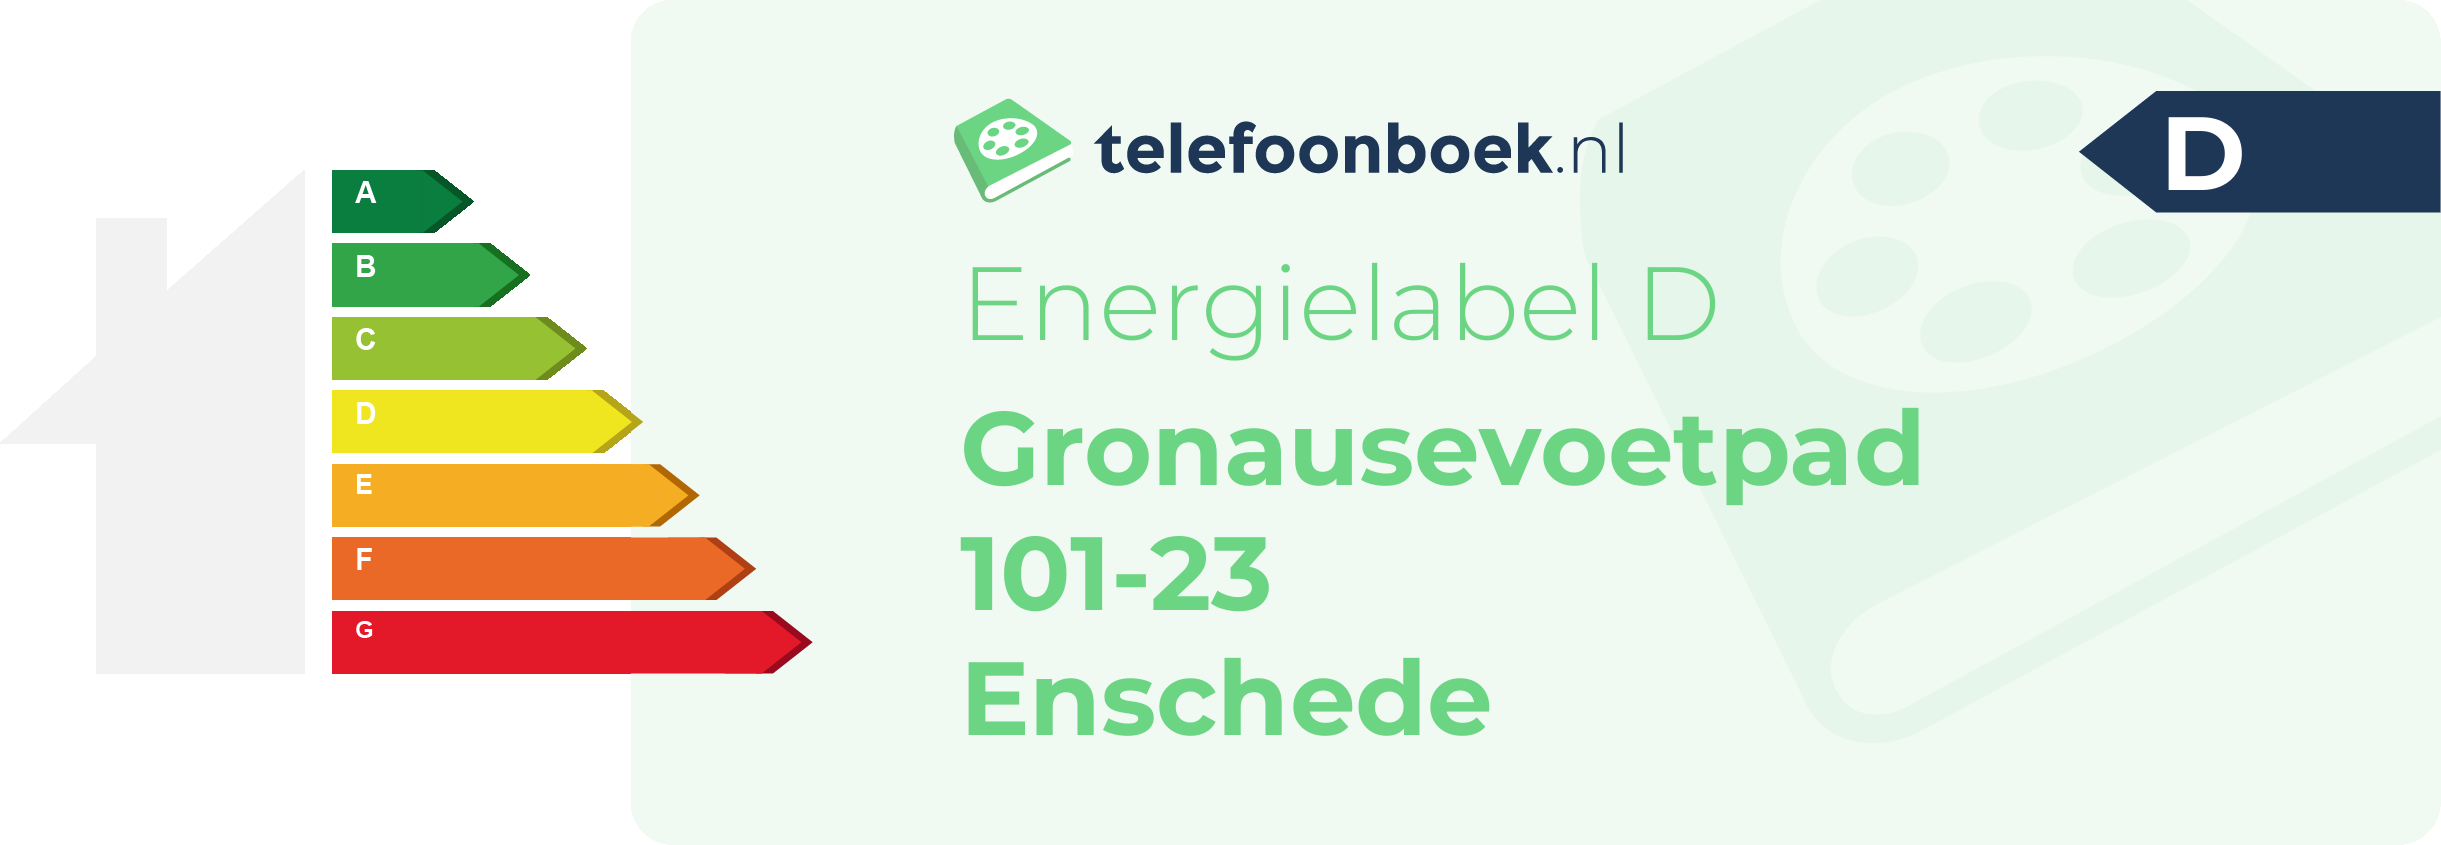 Energielabel Gronausevoetpad 101-23 Enschede